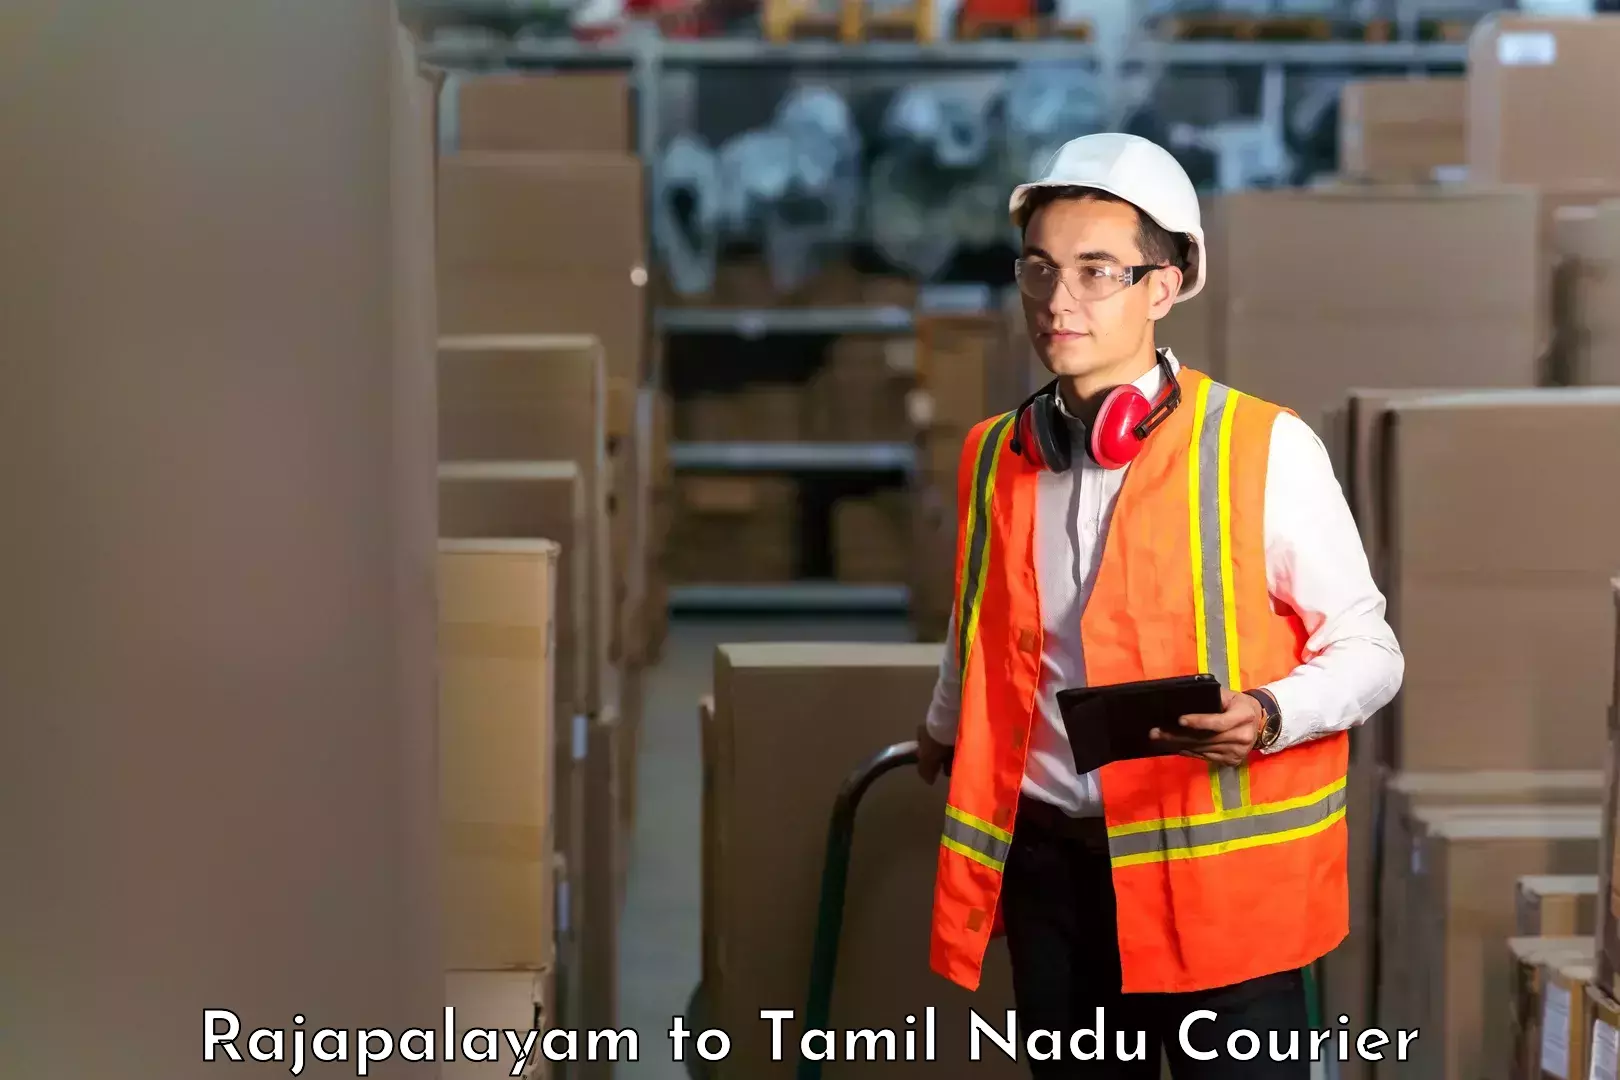 Courier app Rajapalayam to Tamil Nadu